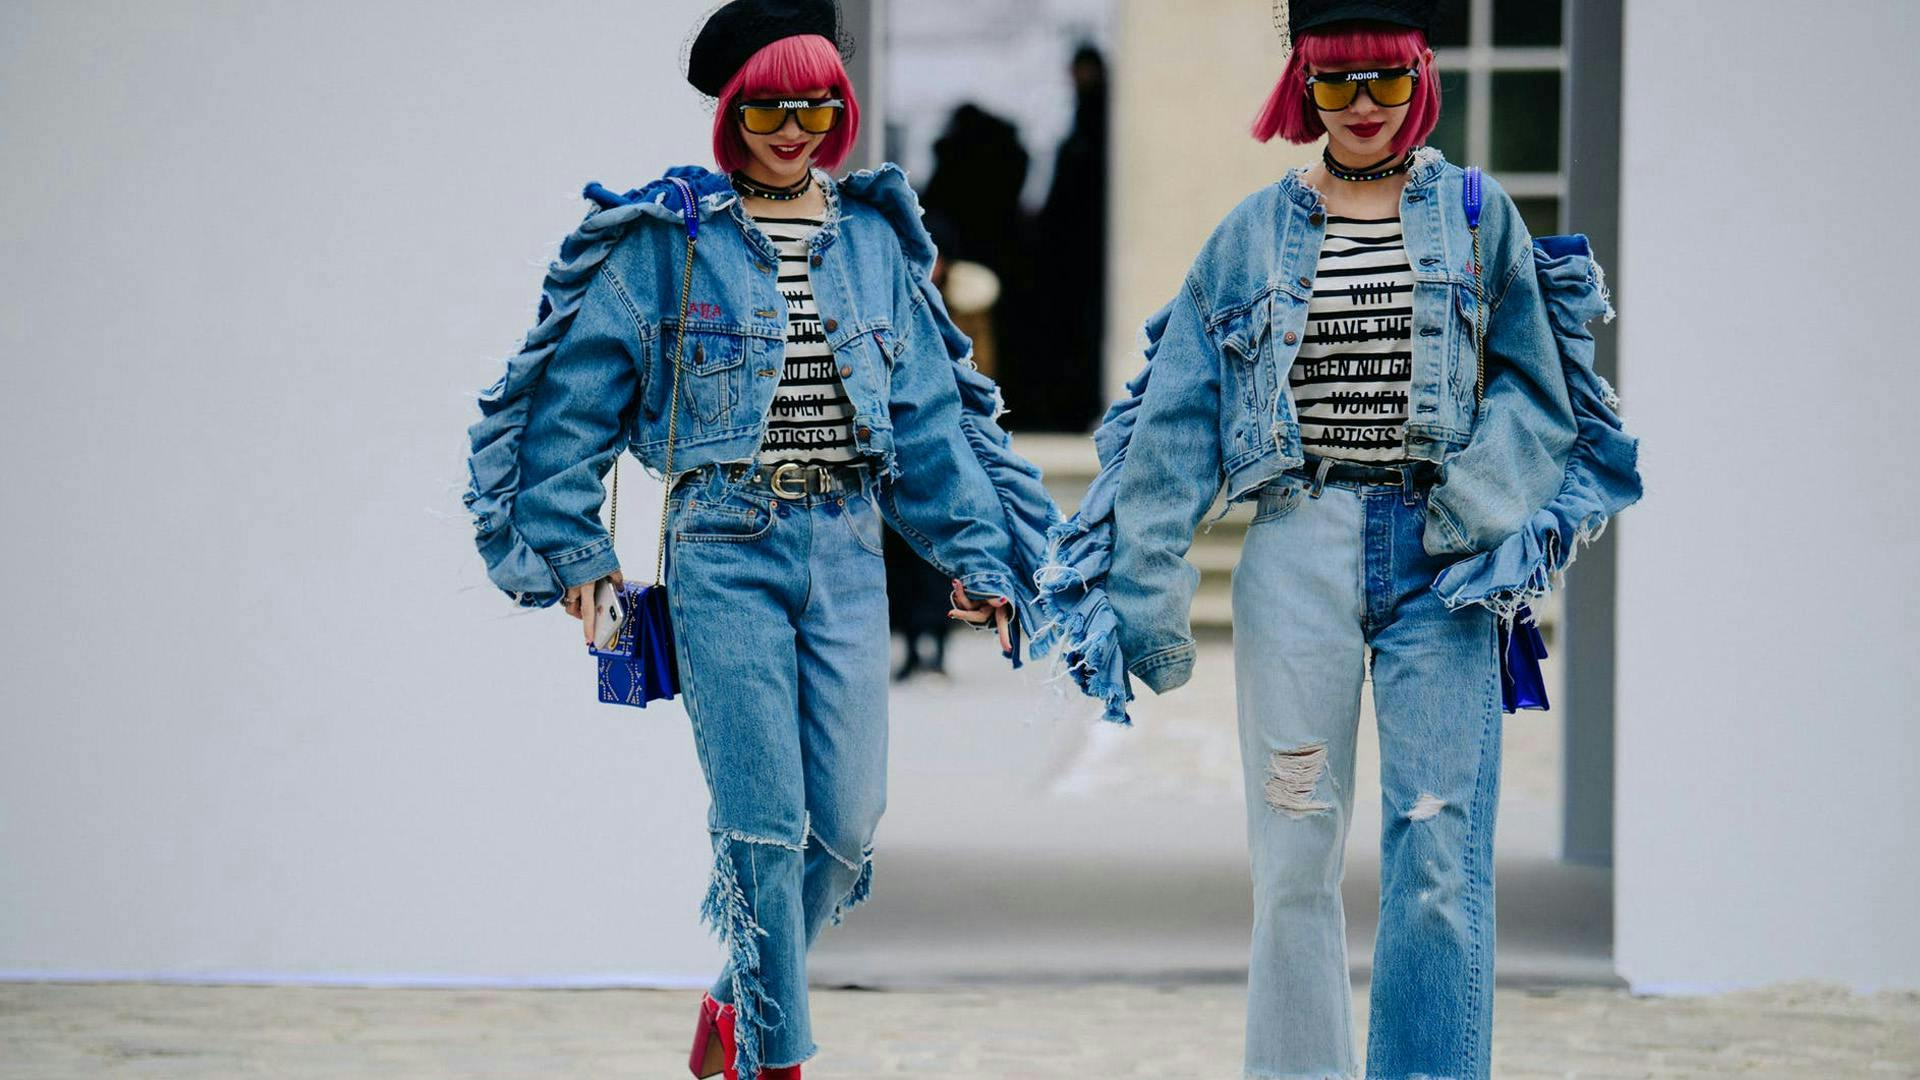 pants clothing apparel jeans denim person human costume sunglasses accessories